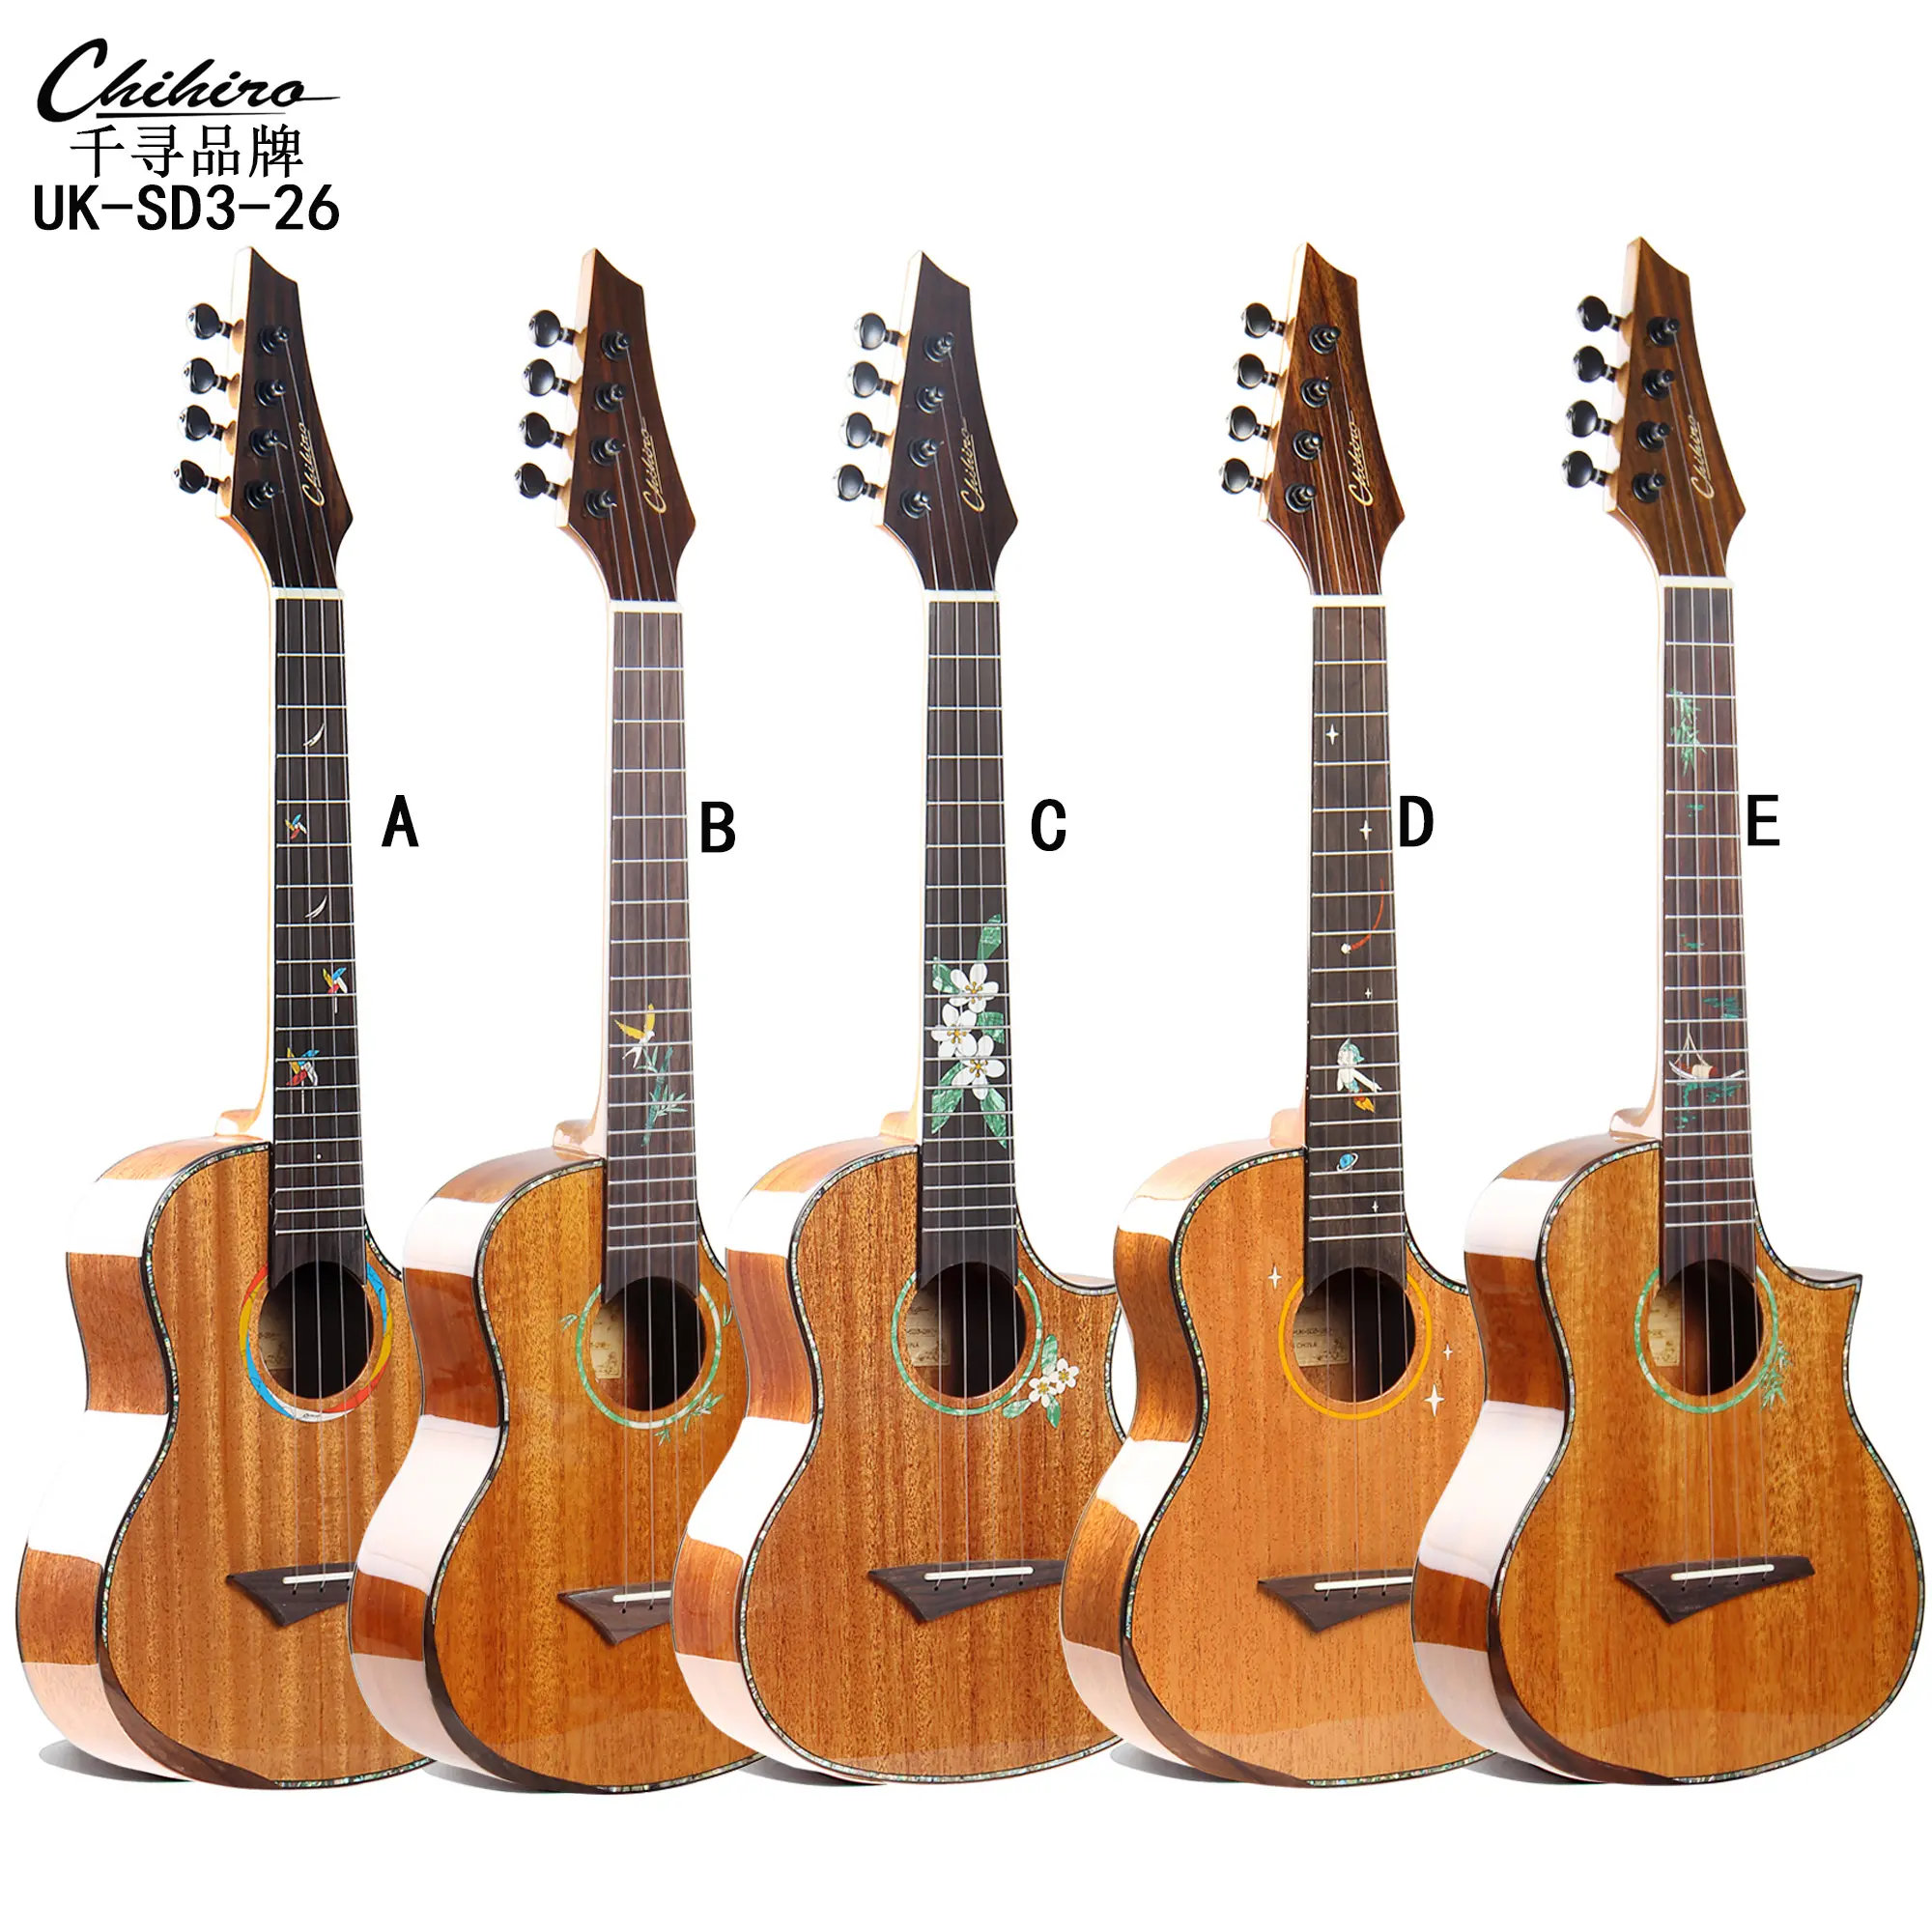 Guitarra profesional Chihiro, ukelele sólido especial, Tenor acústico de 26 pulgadas, todo de caoba, para venta al por mayor